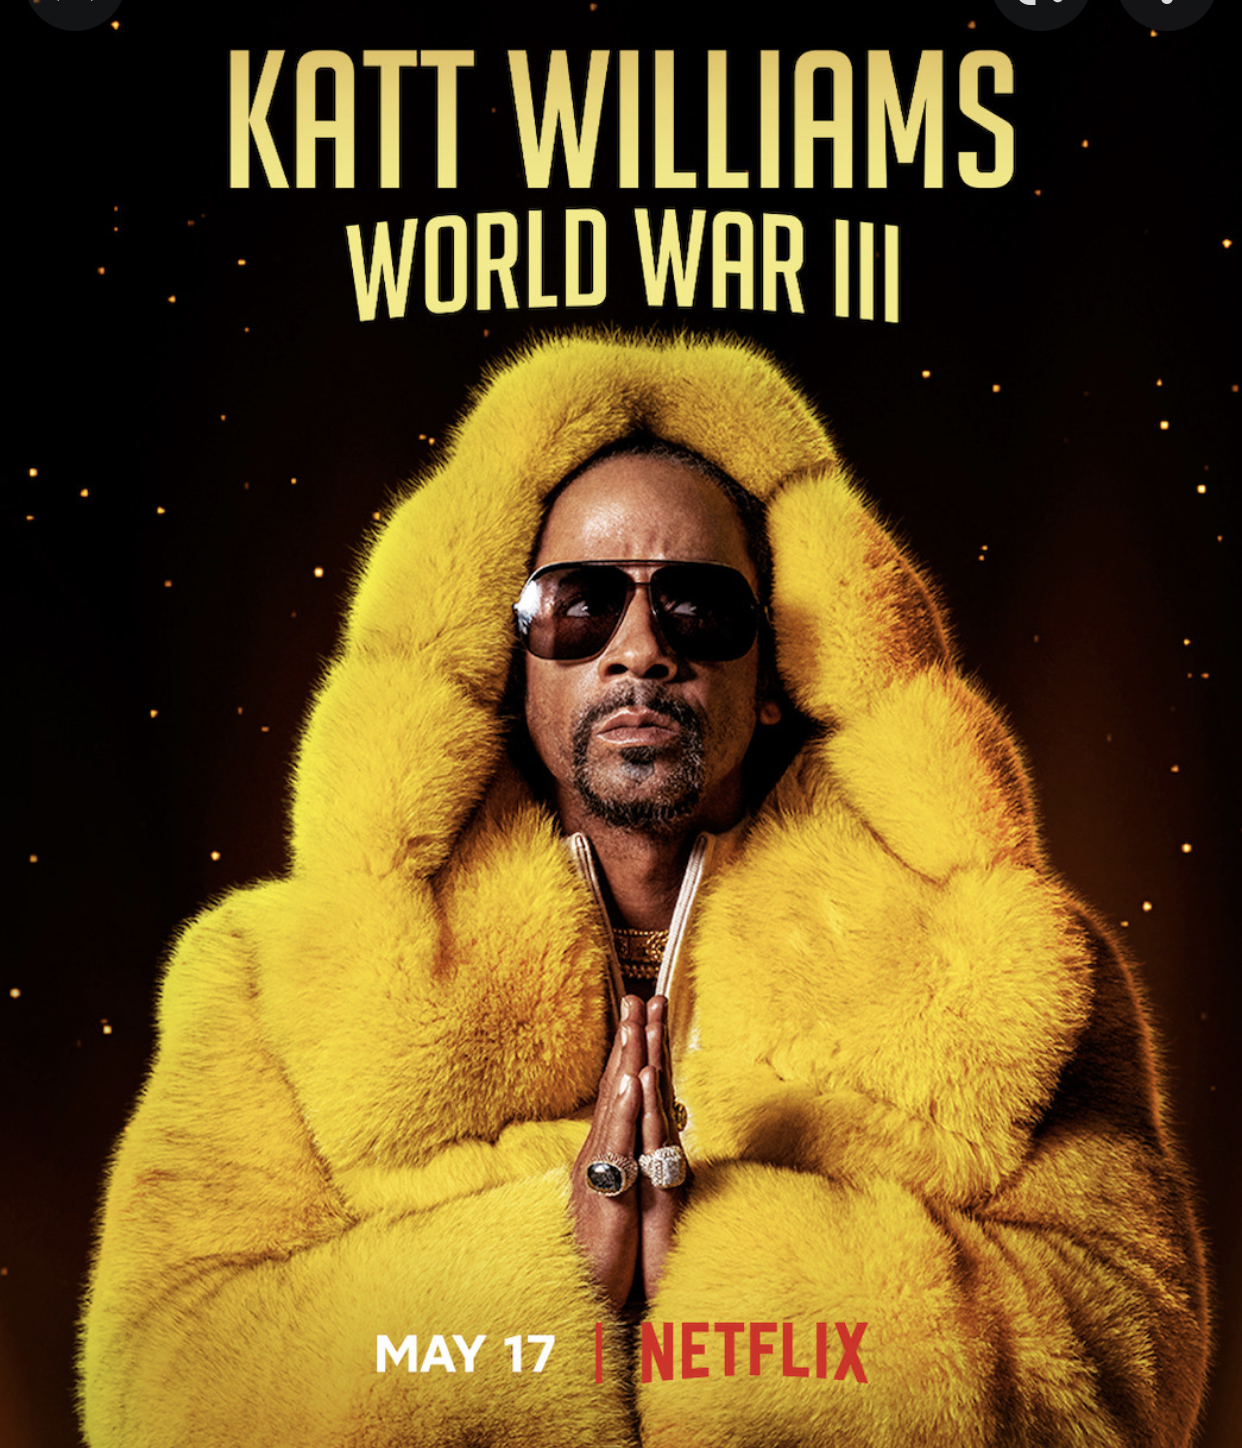 Nonton film Katt Williams: World War III layarkaca21 indoxx1 ganool online streaming terbaru